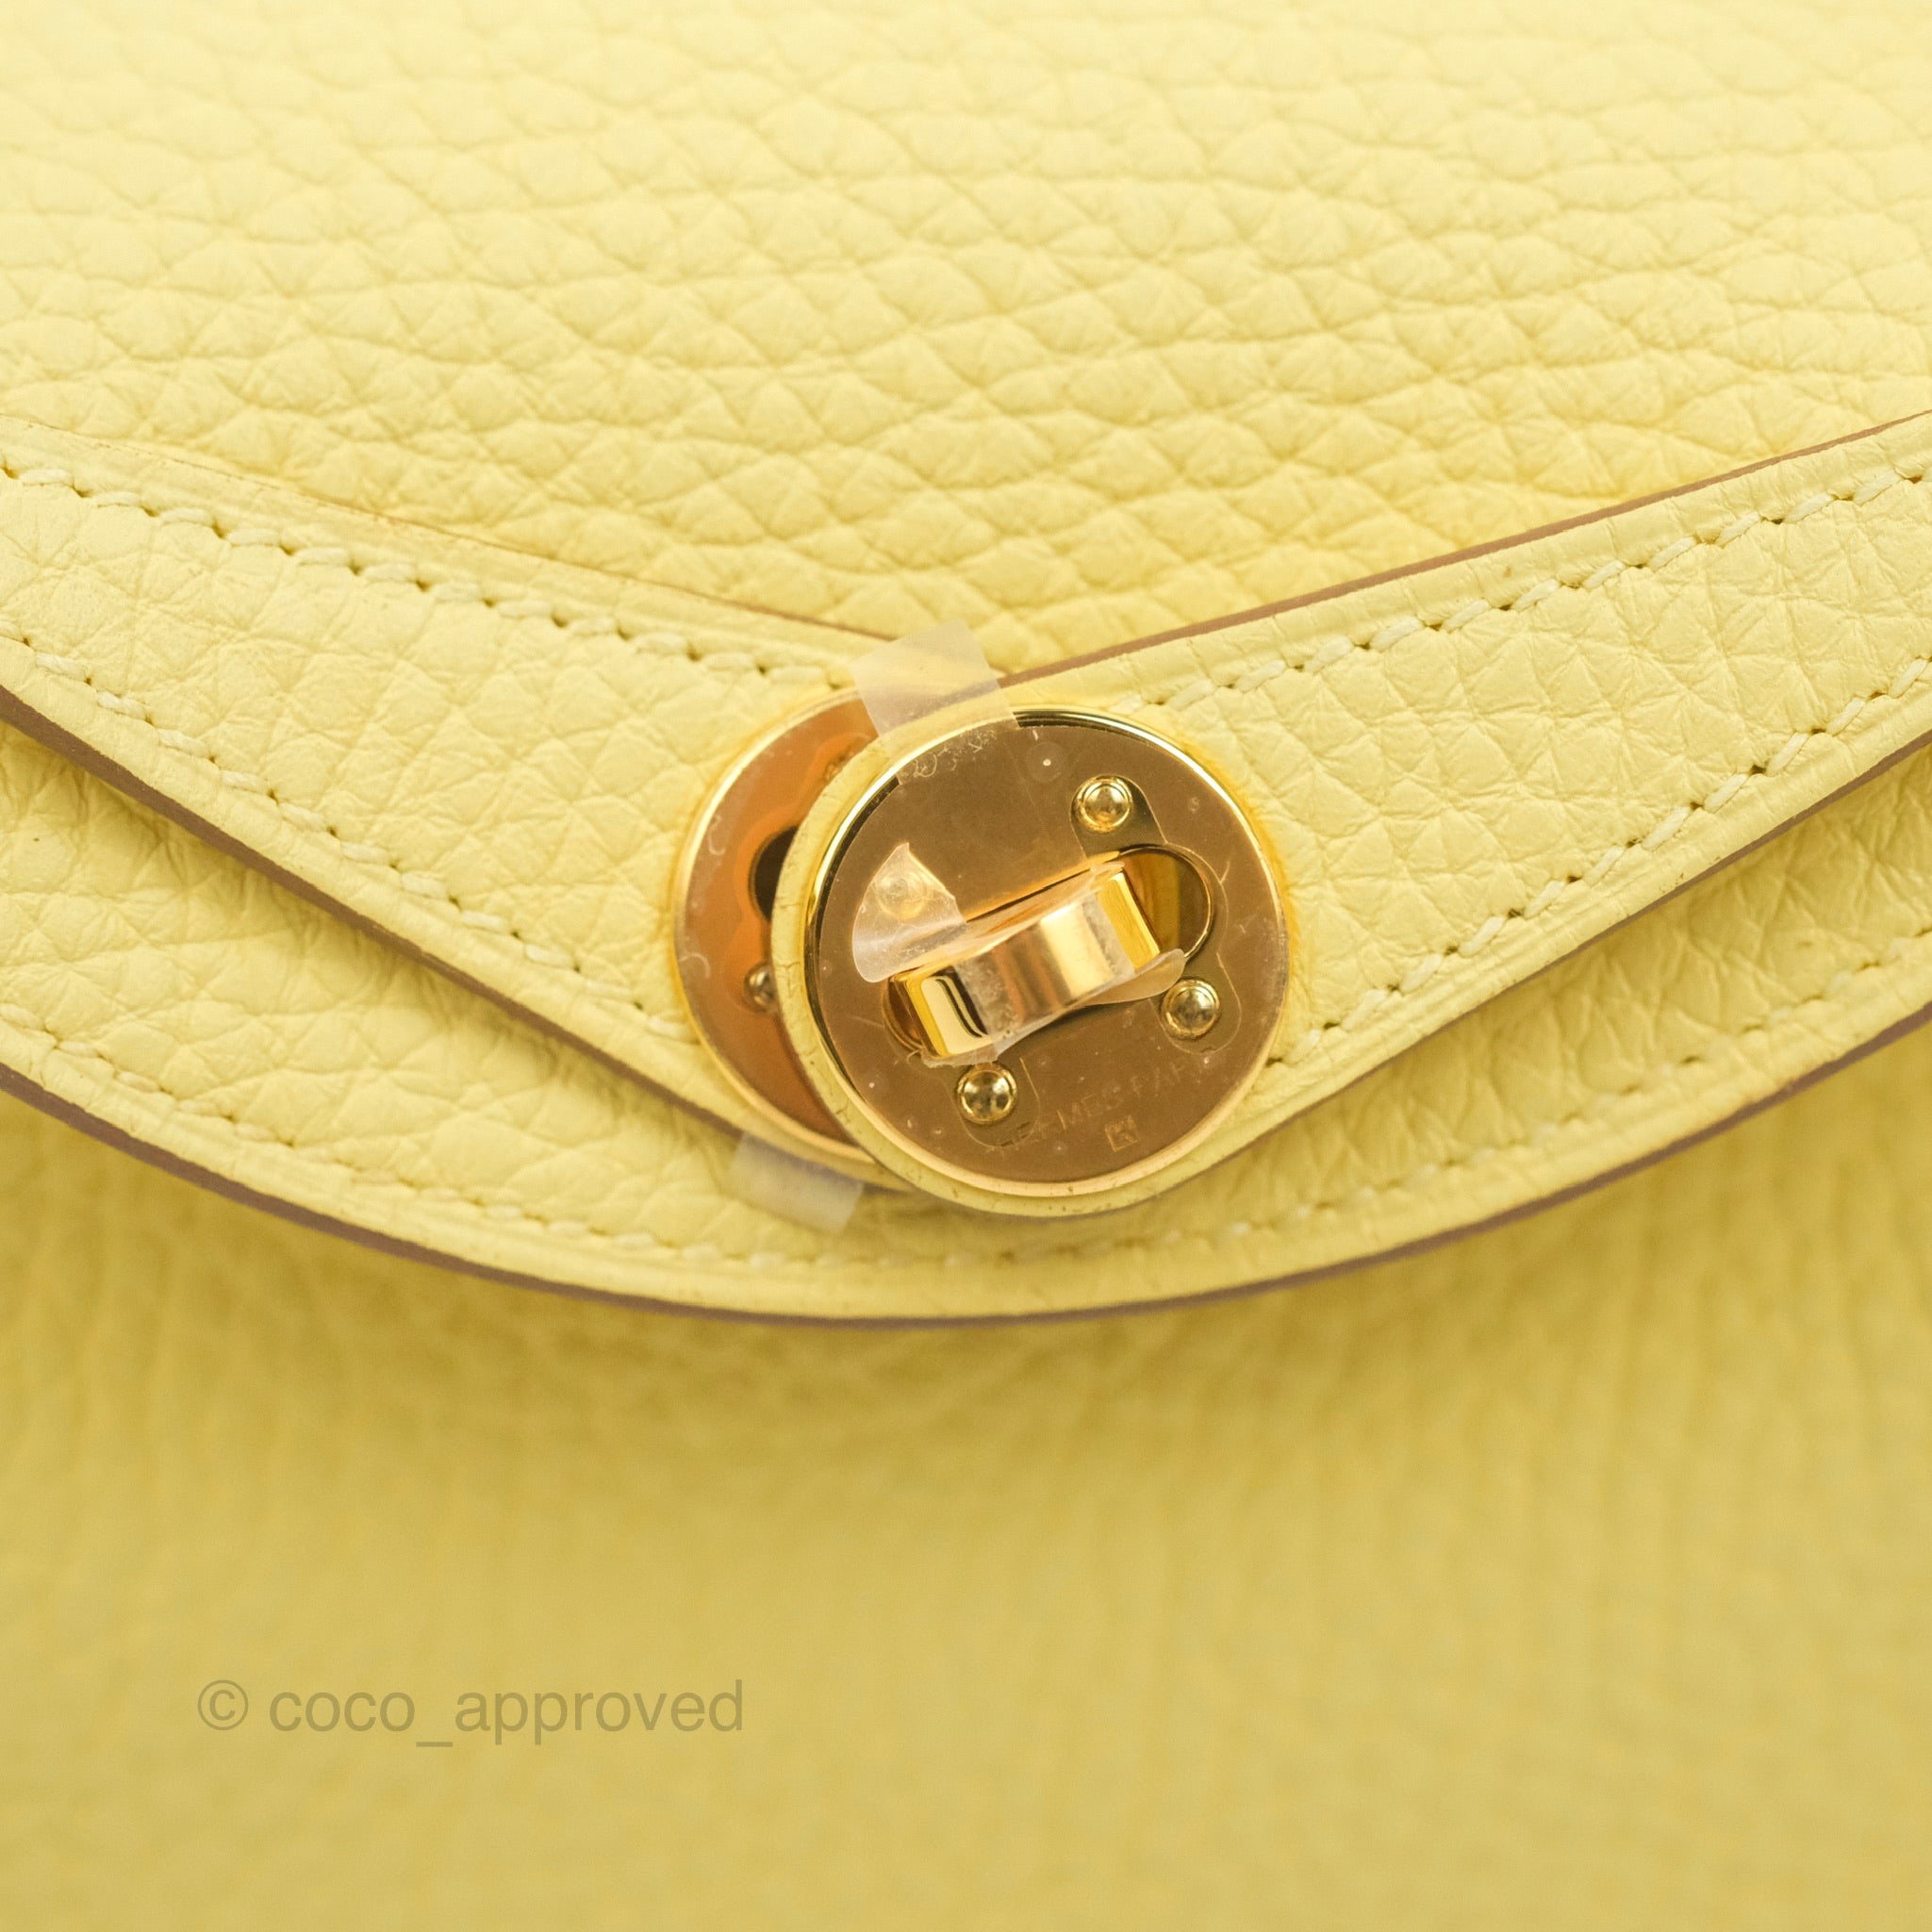 New Hermès Mini Evelyne Jaune Poussin Crossbody Bag in Box